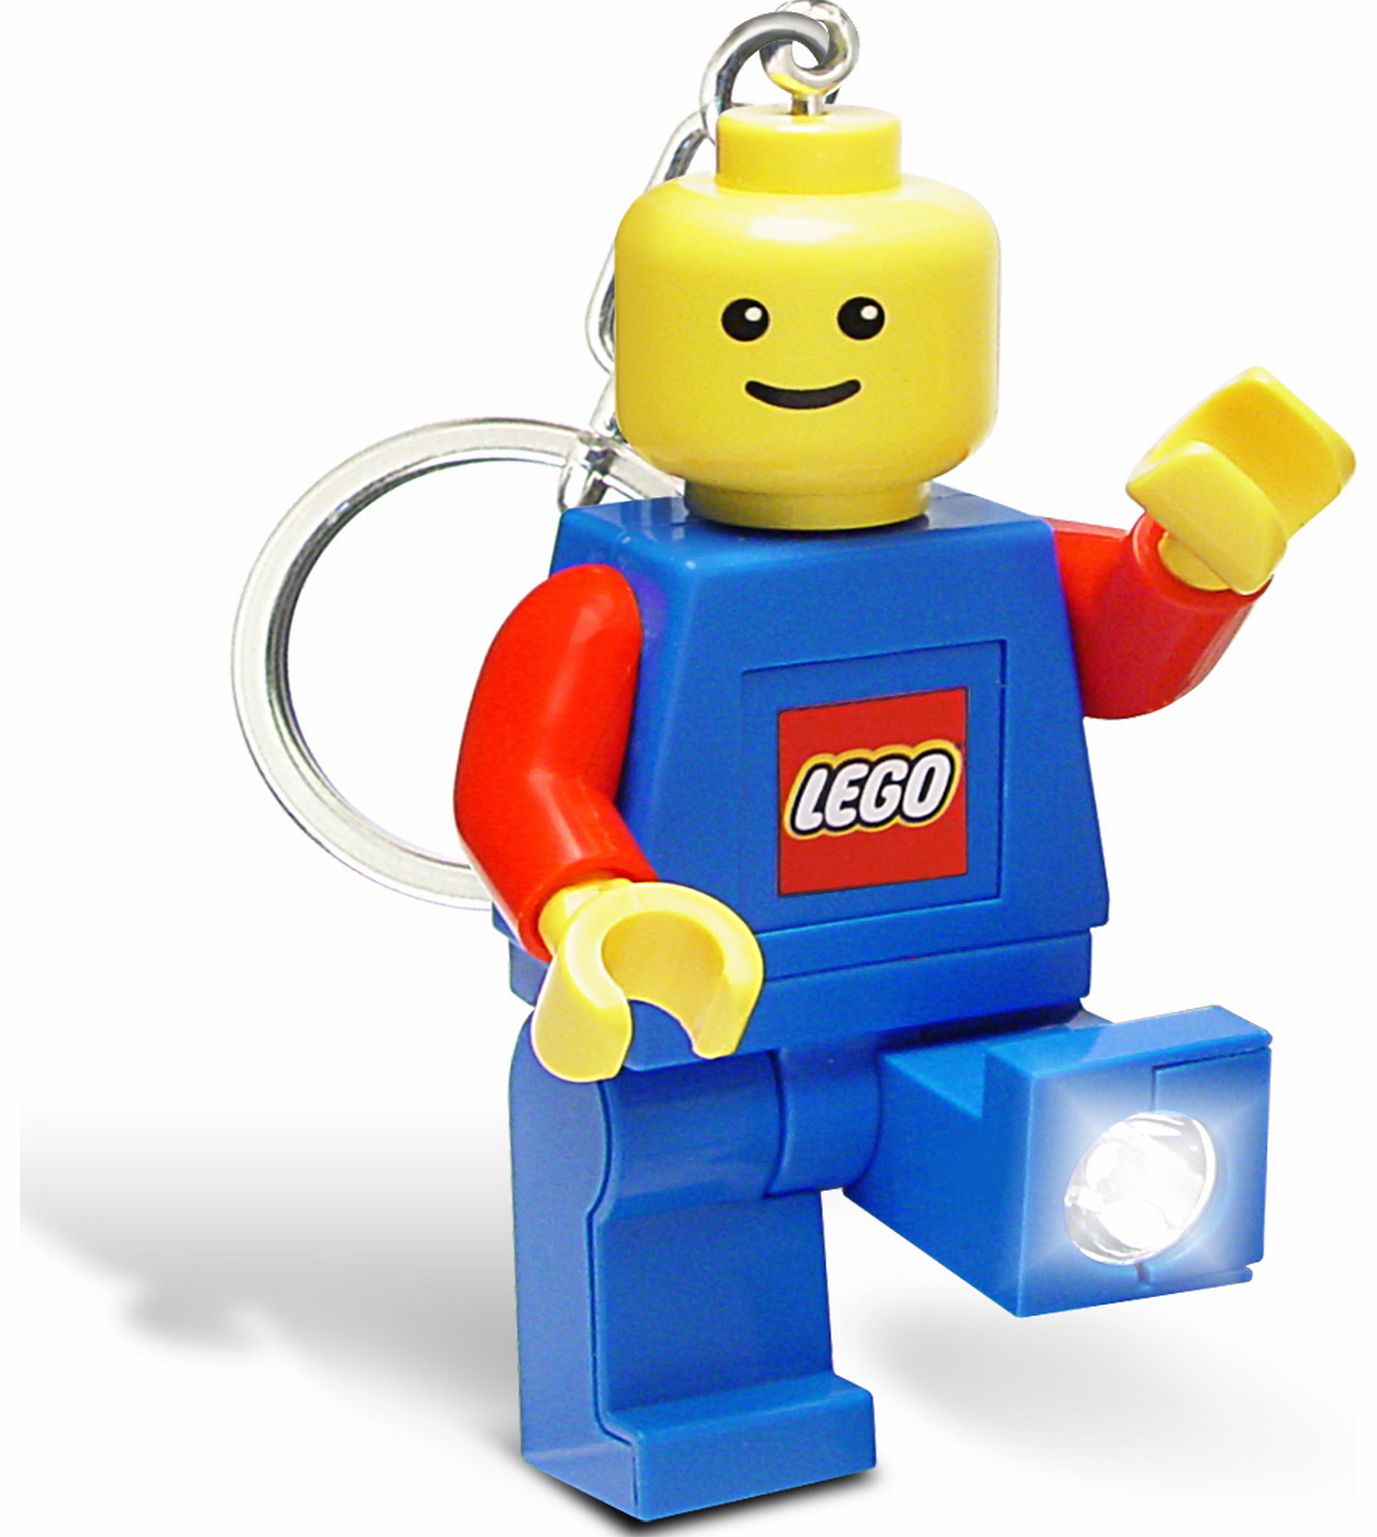 LEGO Classic Keylight